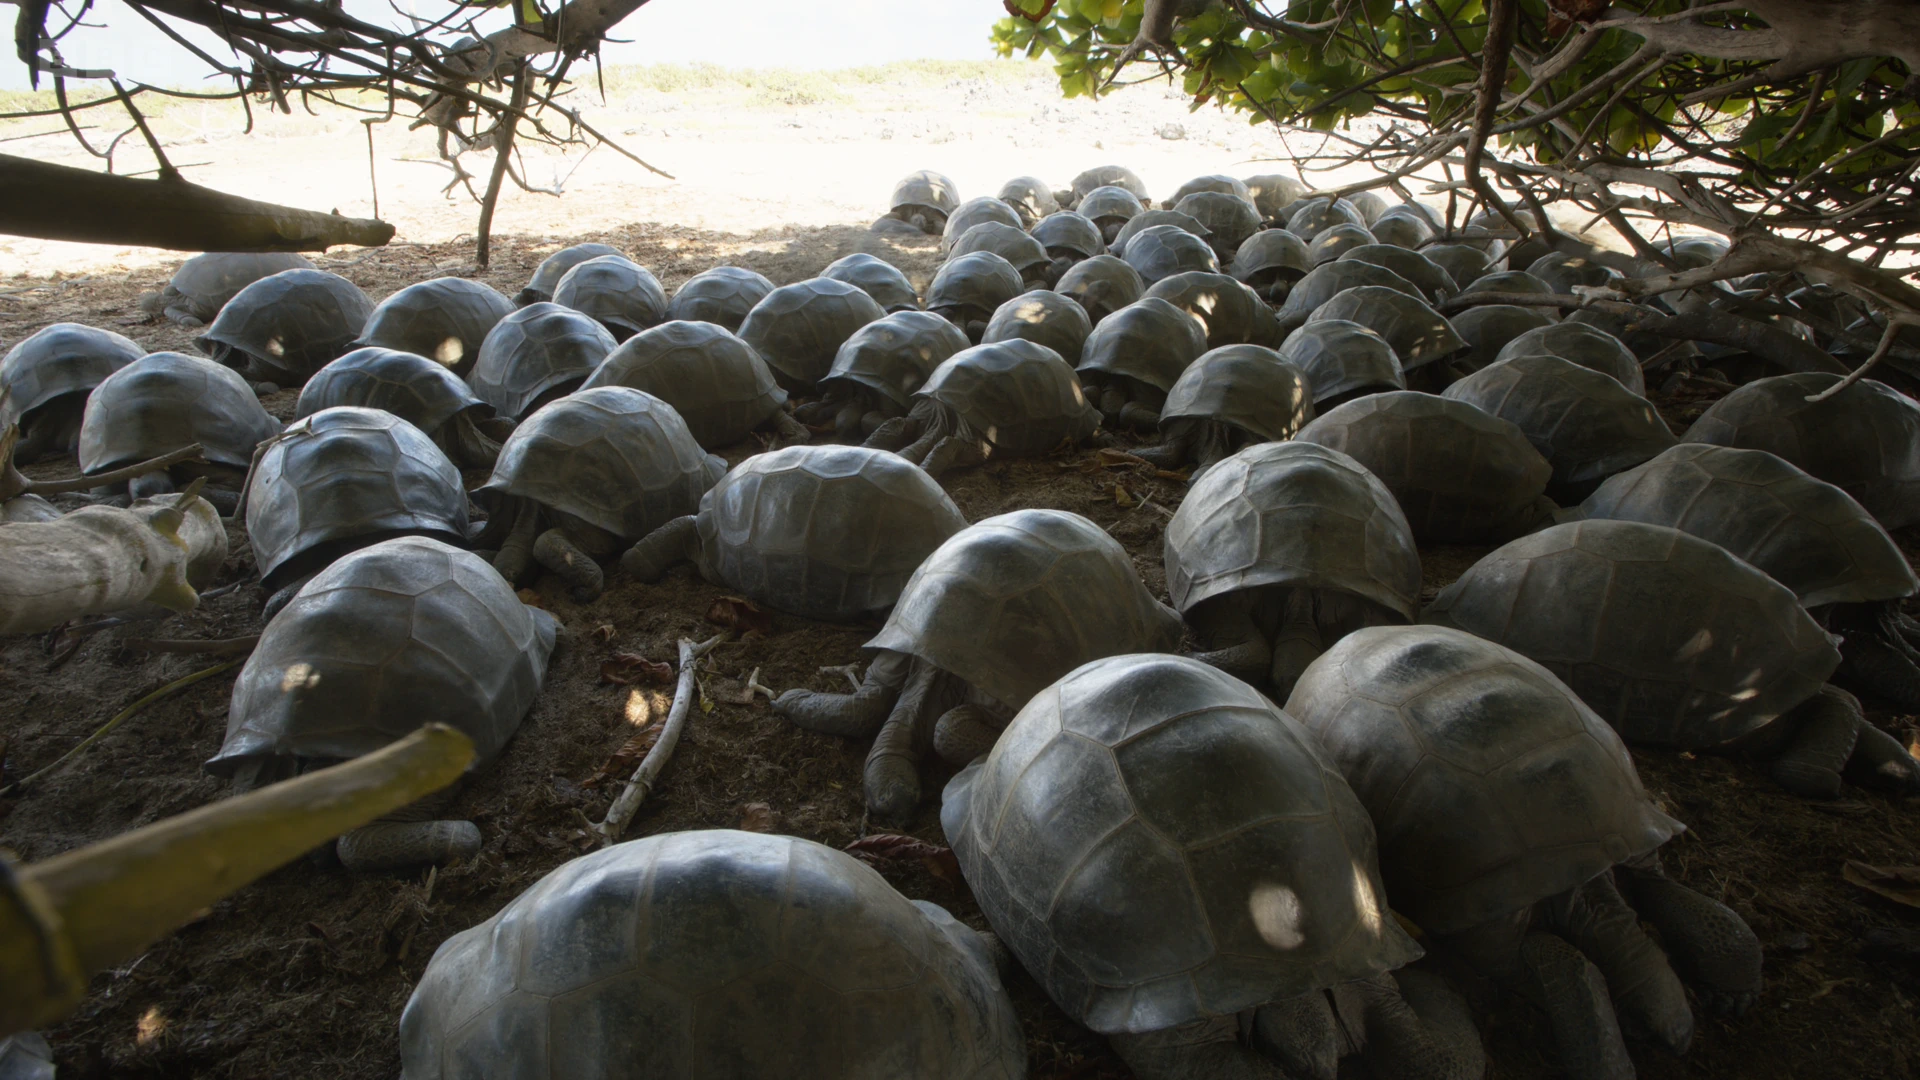 Aldabra giant tortoise (Aldabrachelys gigantea gigantea) as shown in A Perfect Planet - Volcano